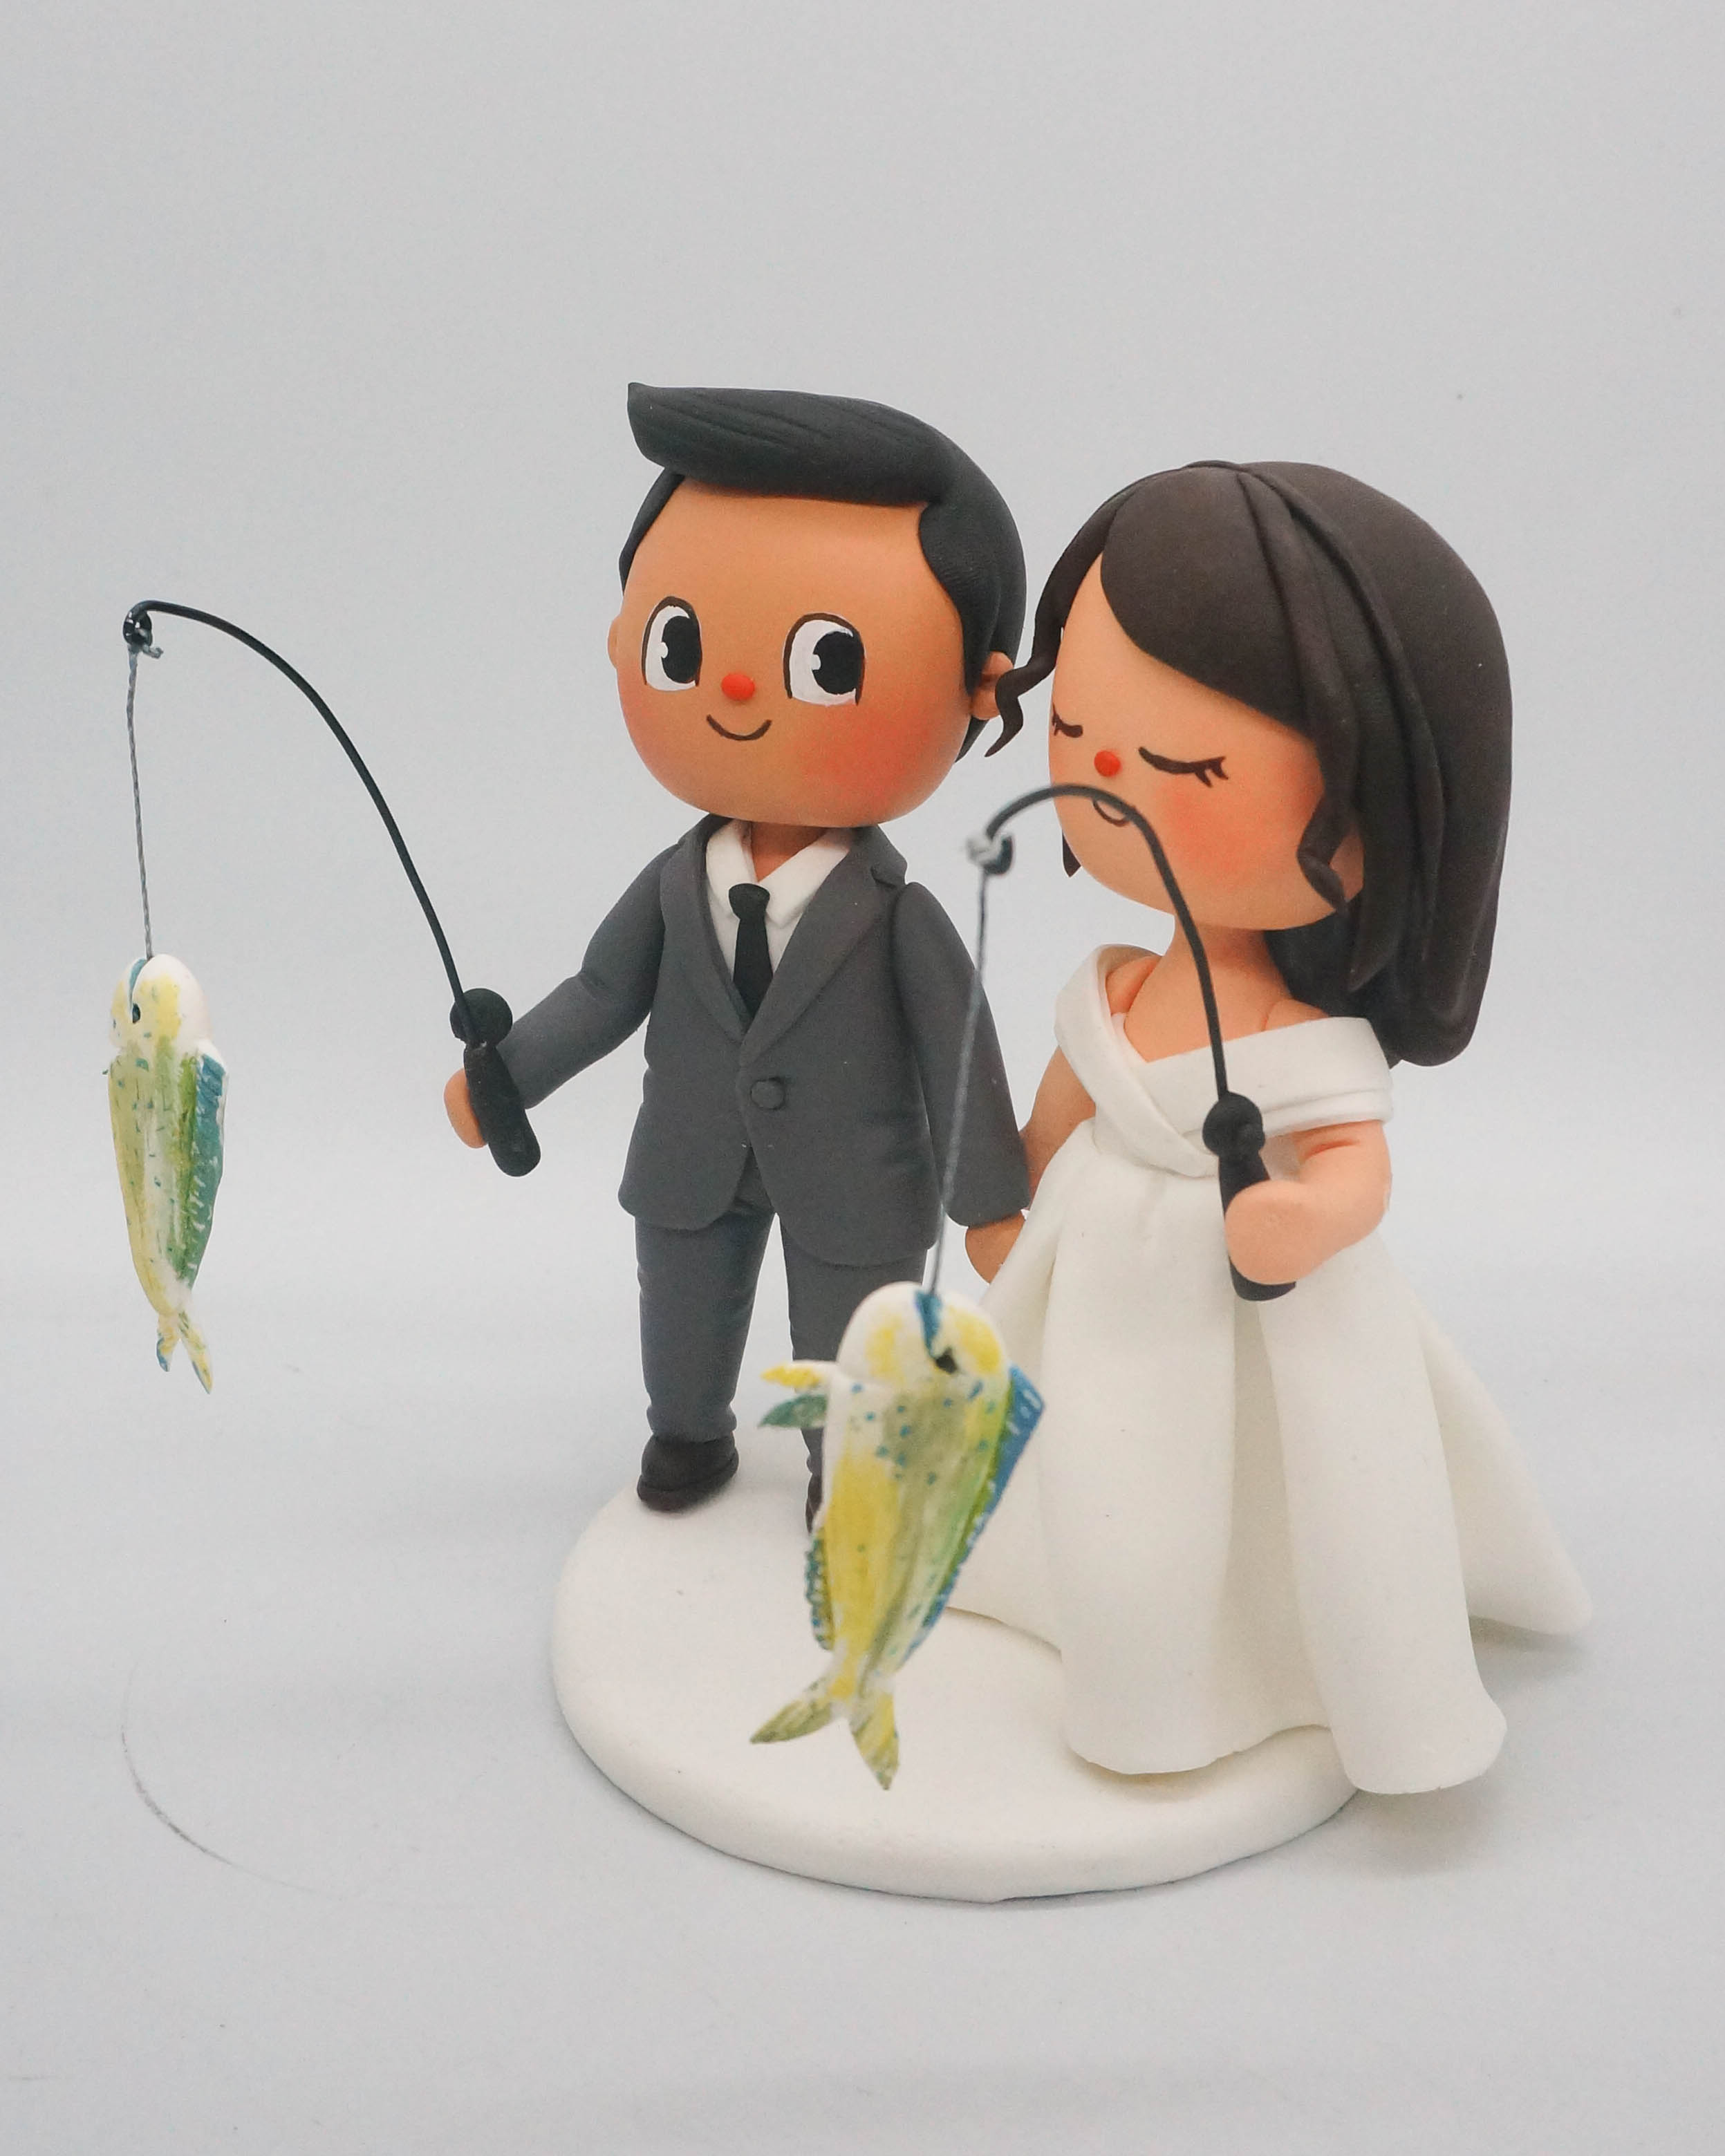 https://www.worldcaketopper.com/images/thumbs/0008995_fishing-wedding-cake-topper-animal-crossing-villager-figure.jpeg